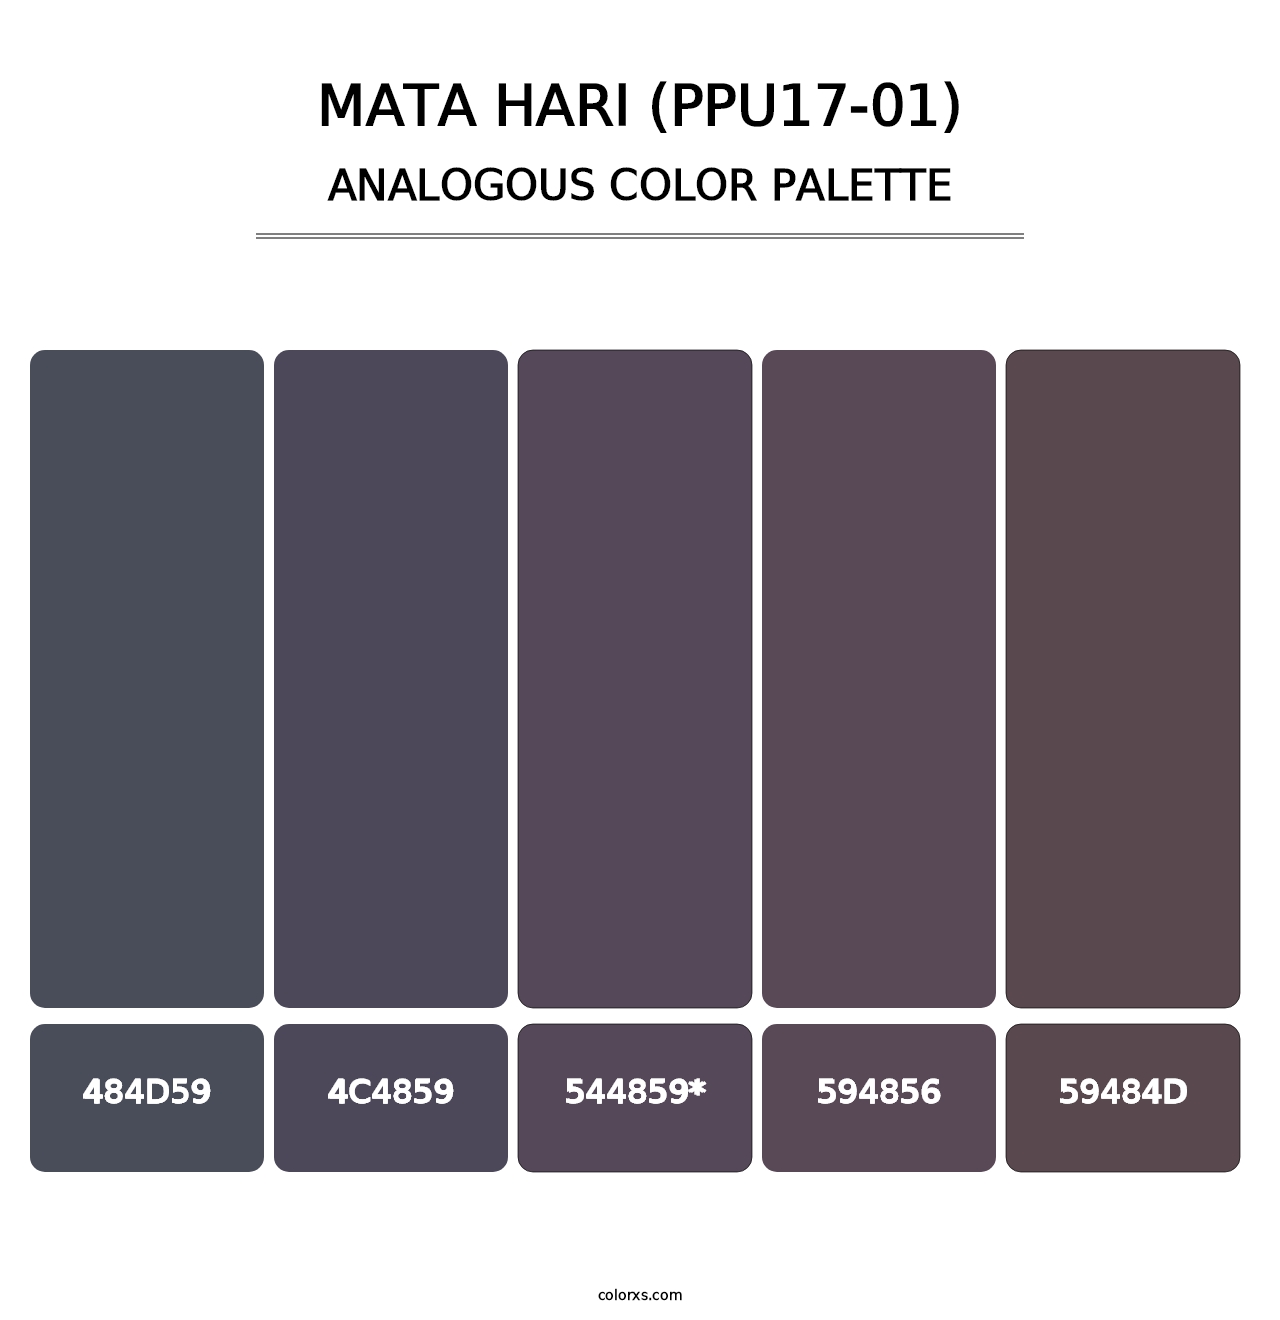 Mata Hari (PPU17-01) - Analogous Color Palette